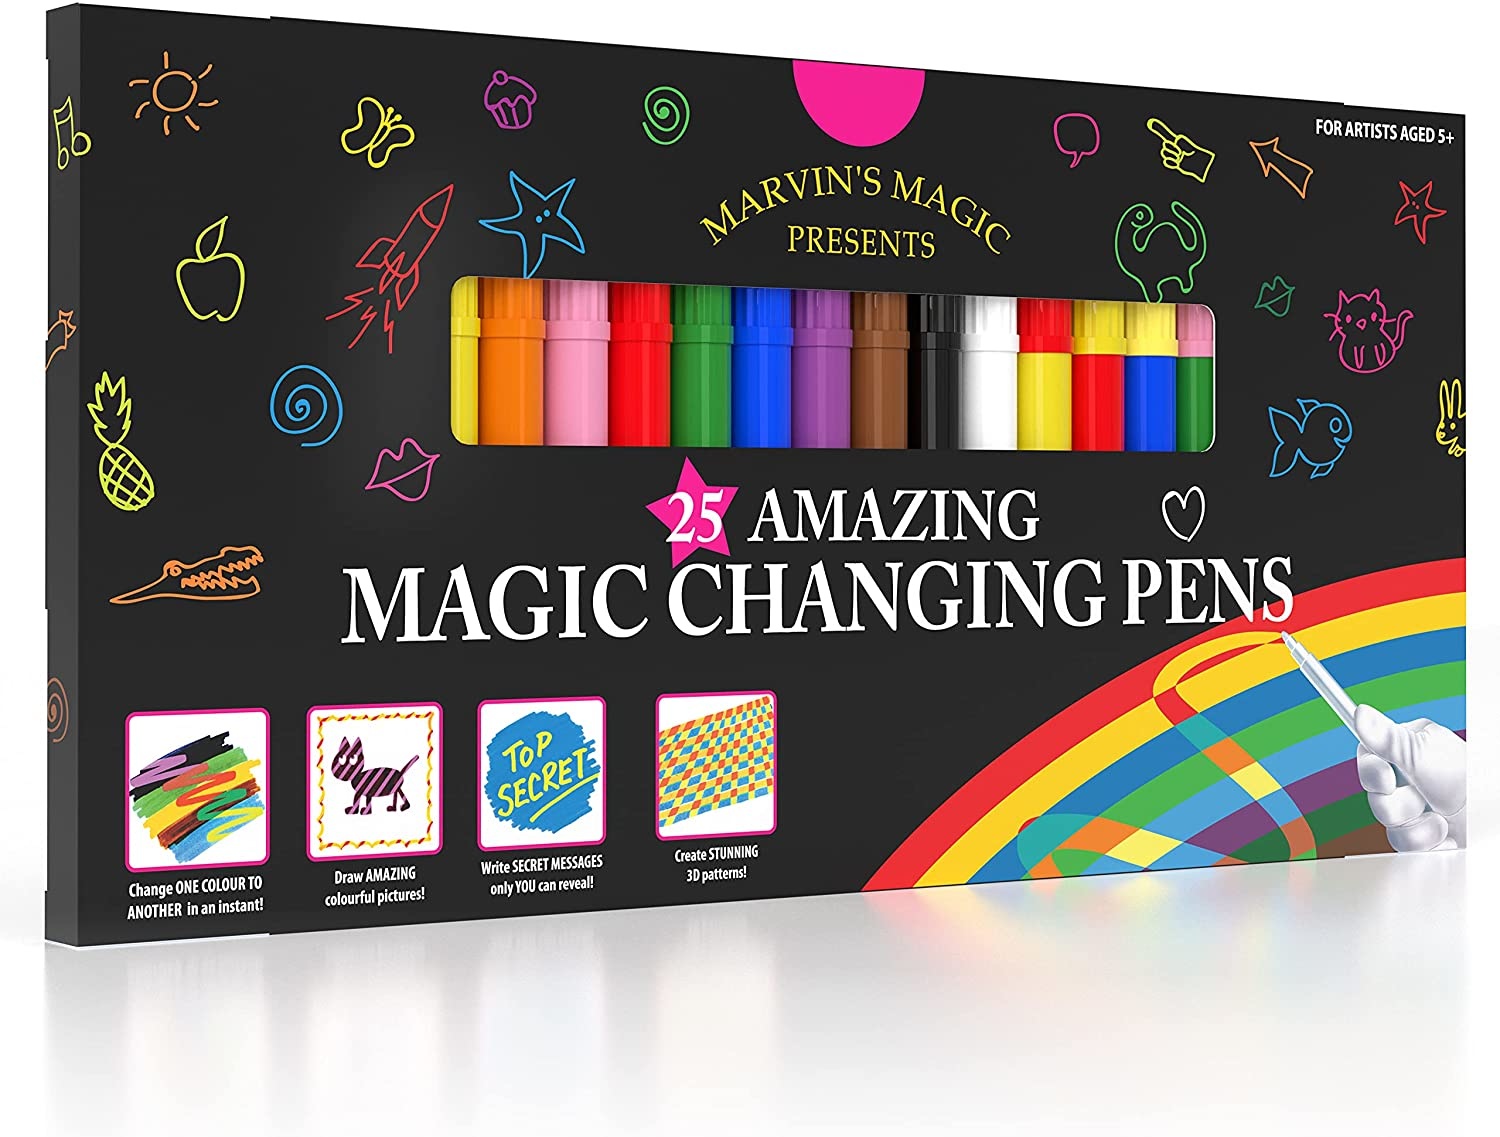 Community of Magic Pens